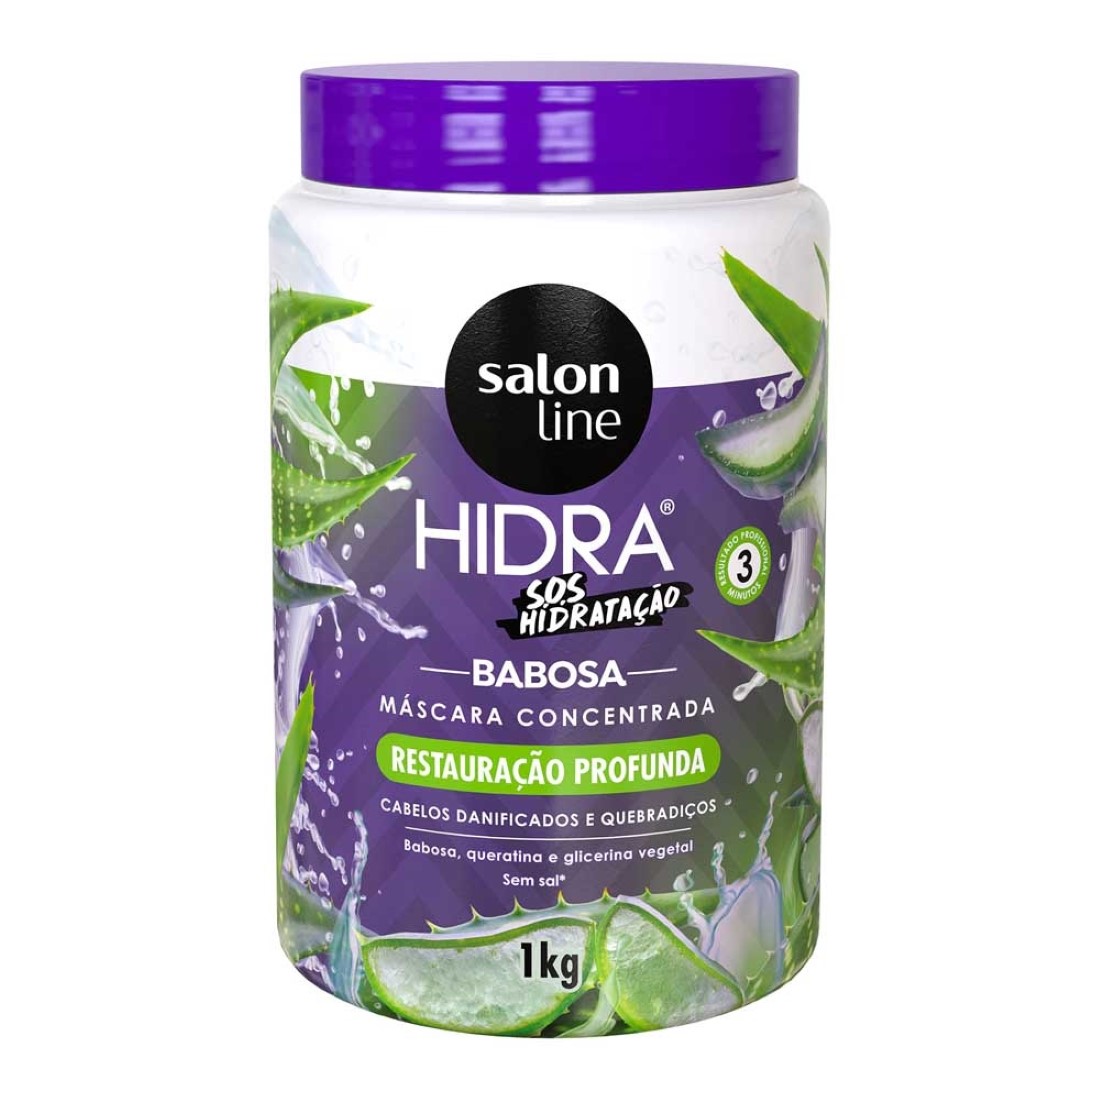 Máscara Hidra S.O.S Hidratação Babosa 1Kg - Salon Line